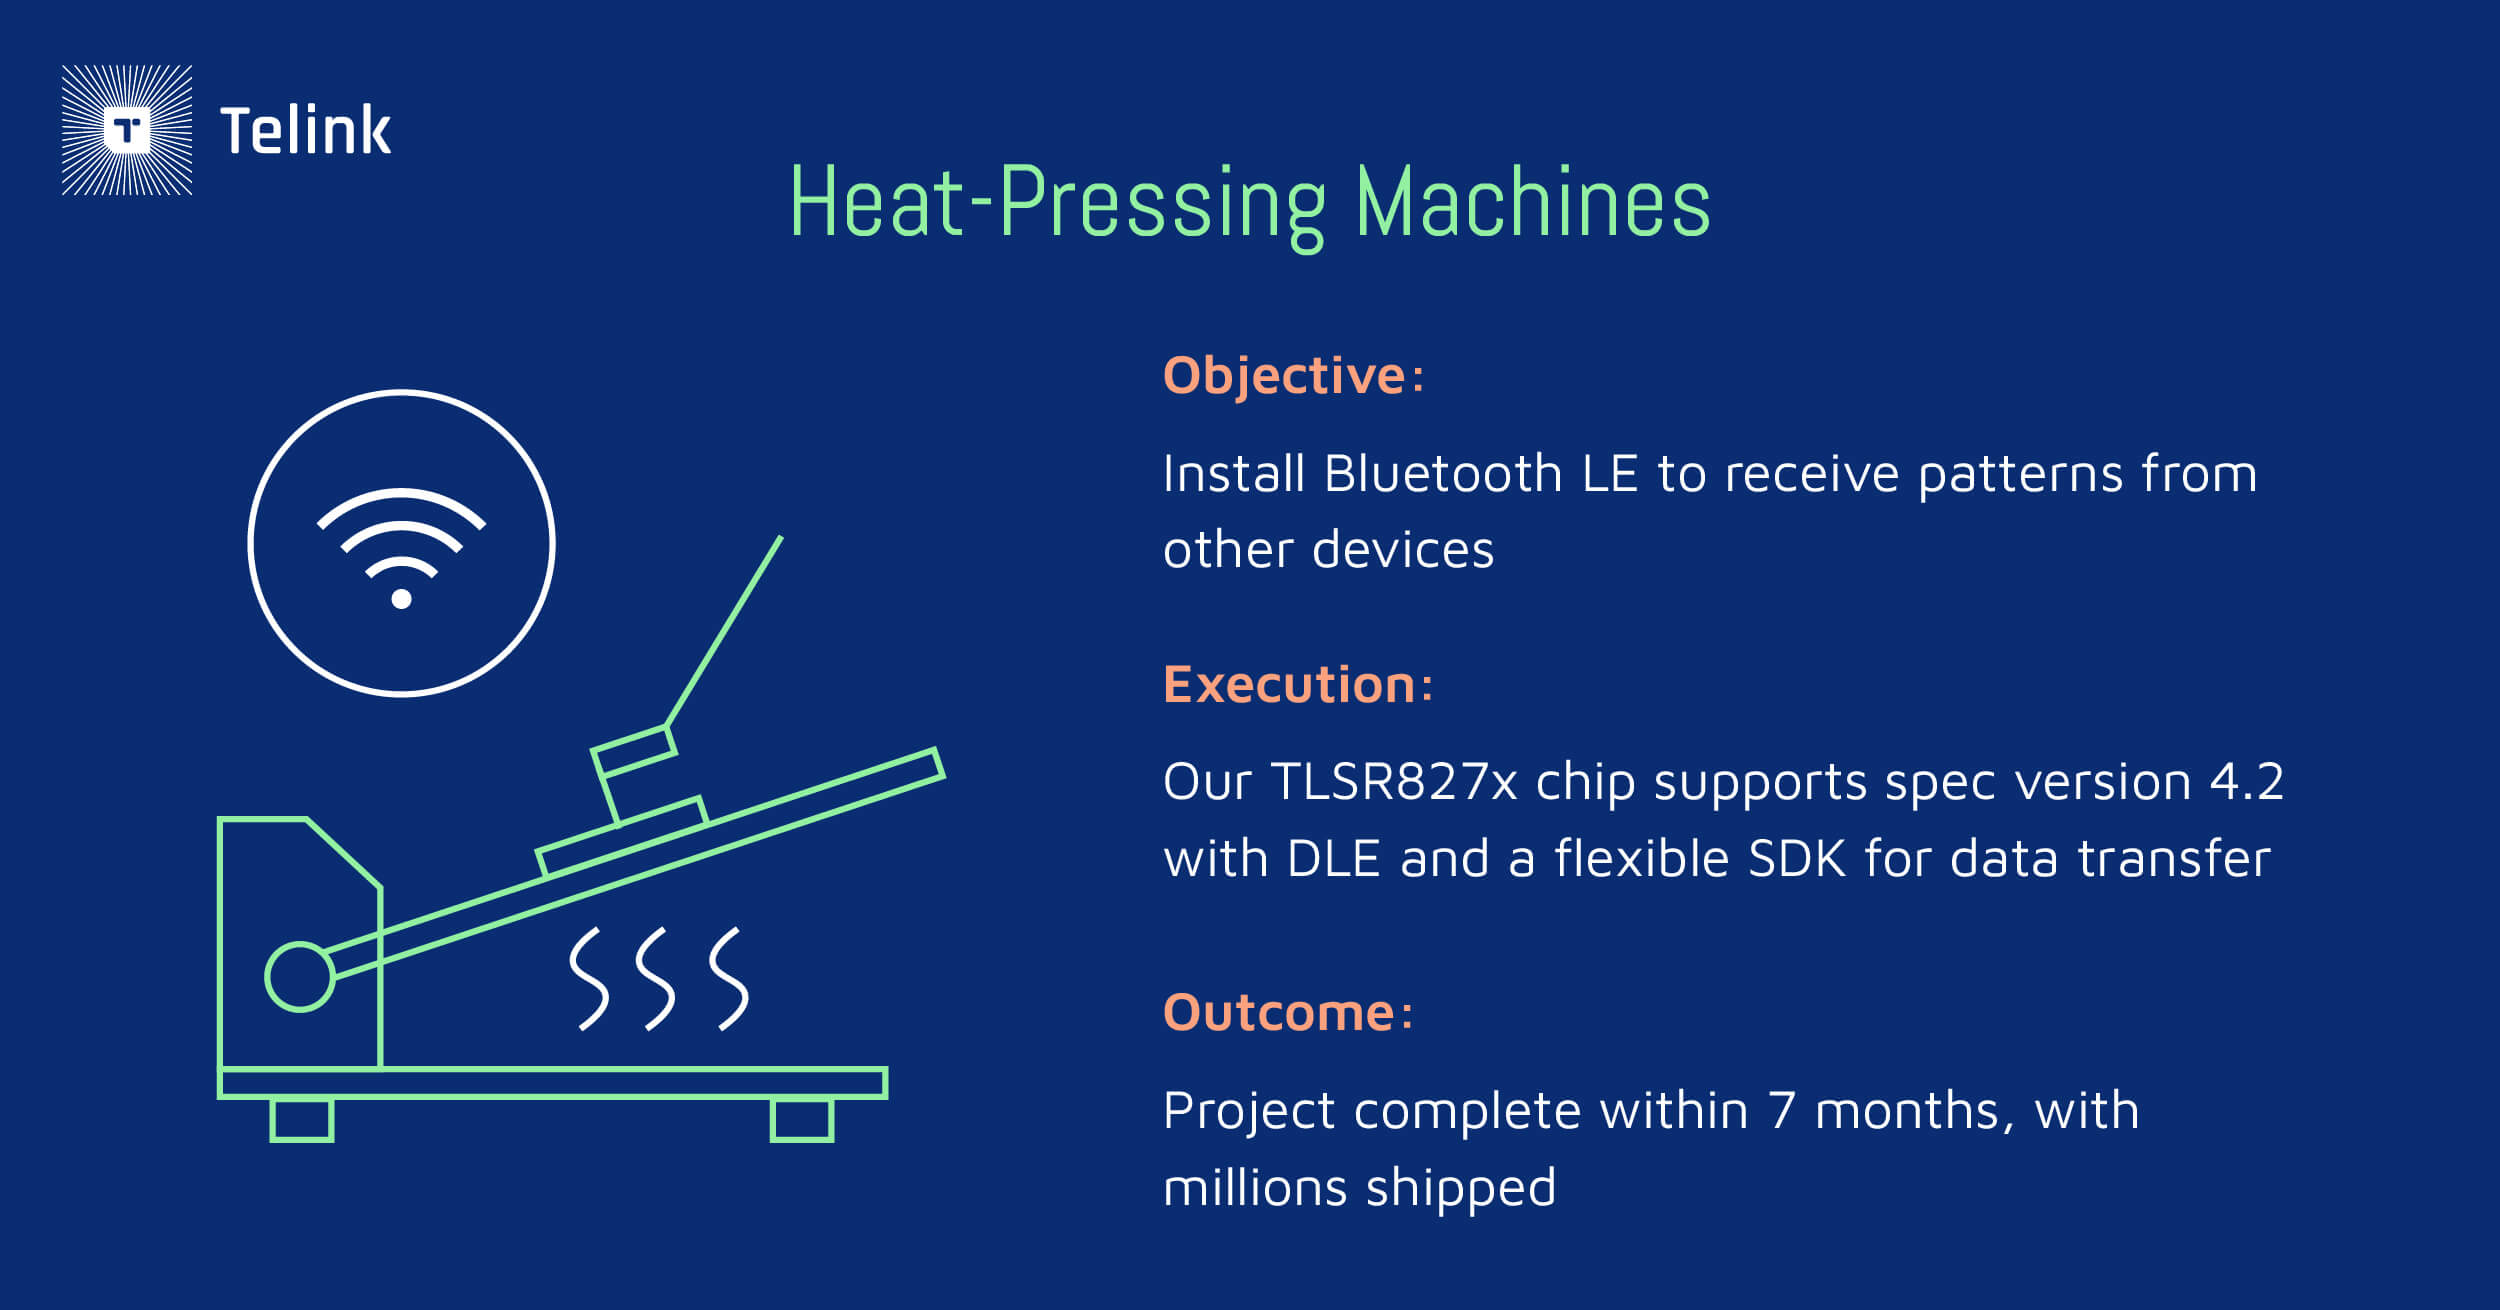 Development process for heat-pressing machines